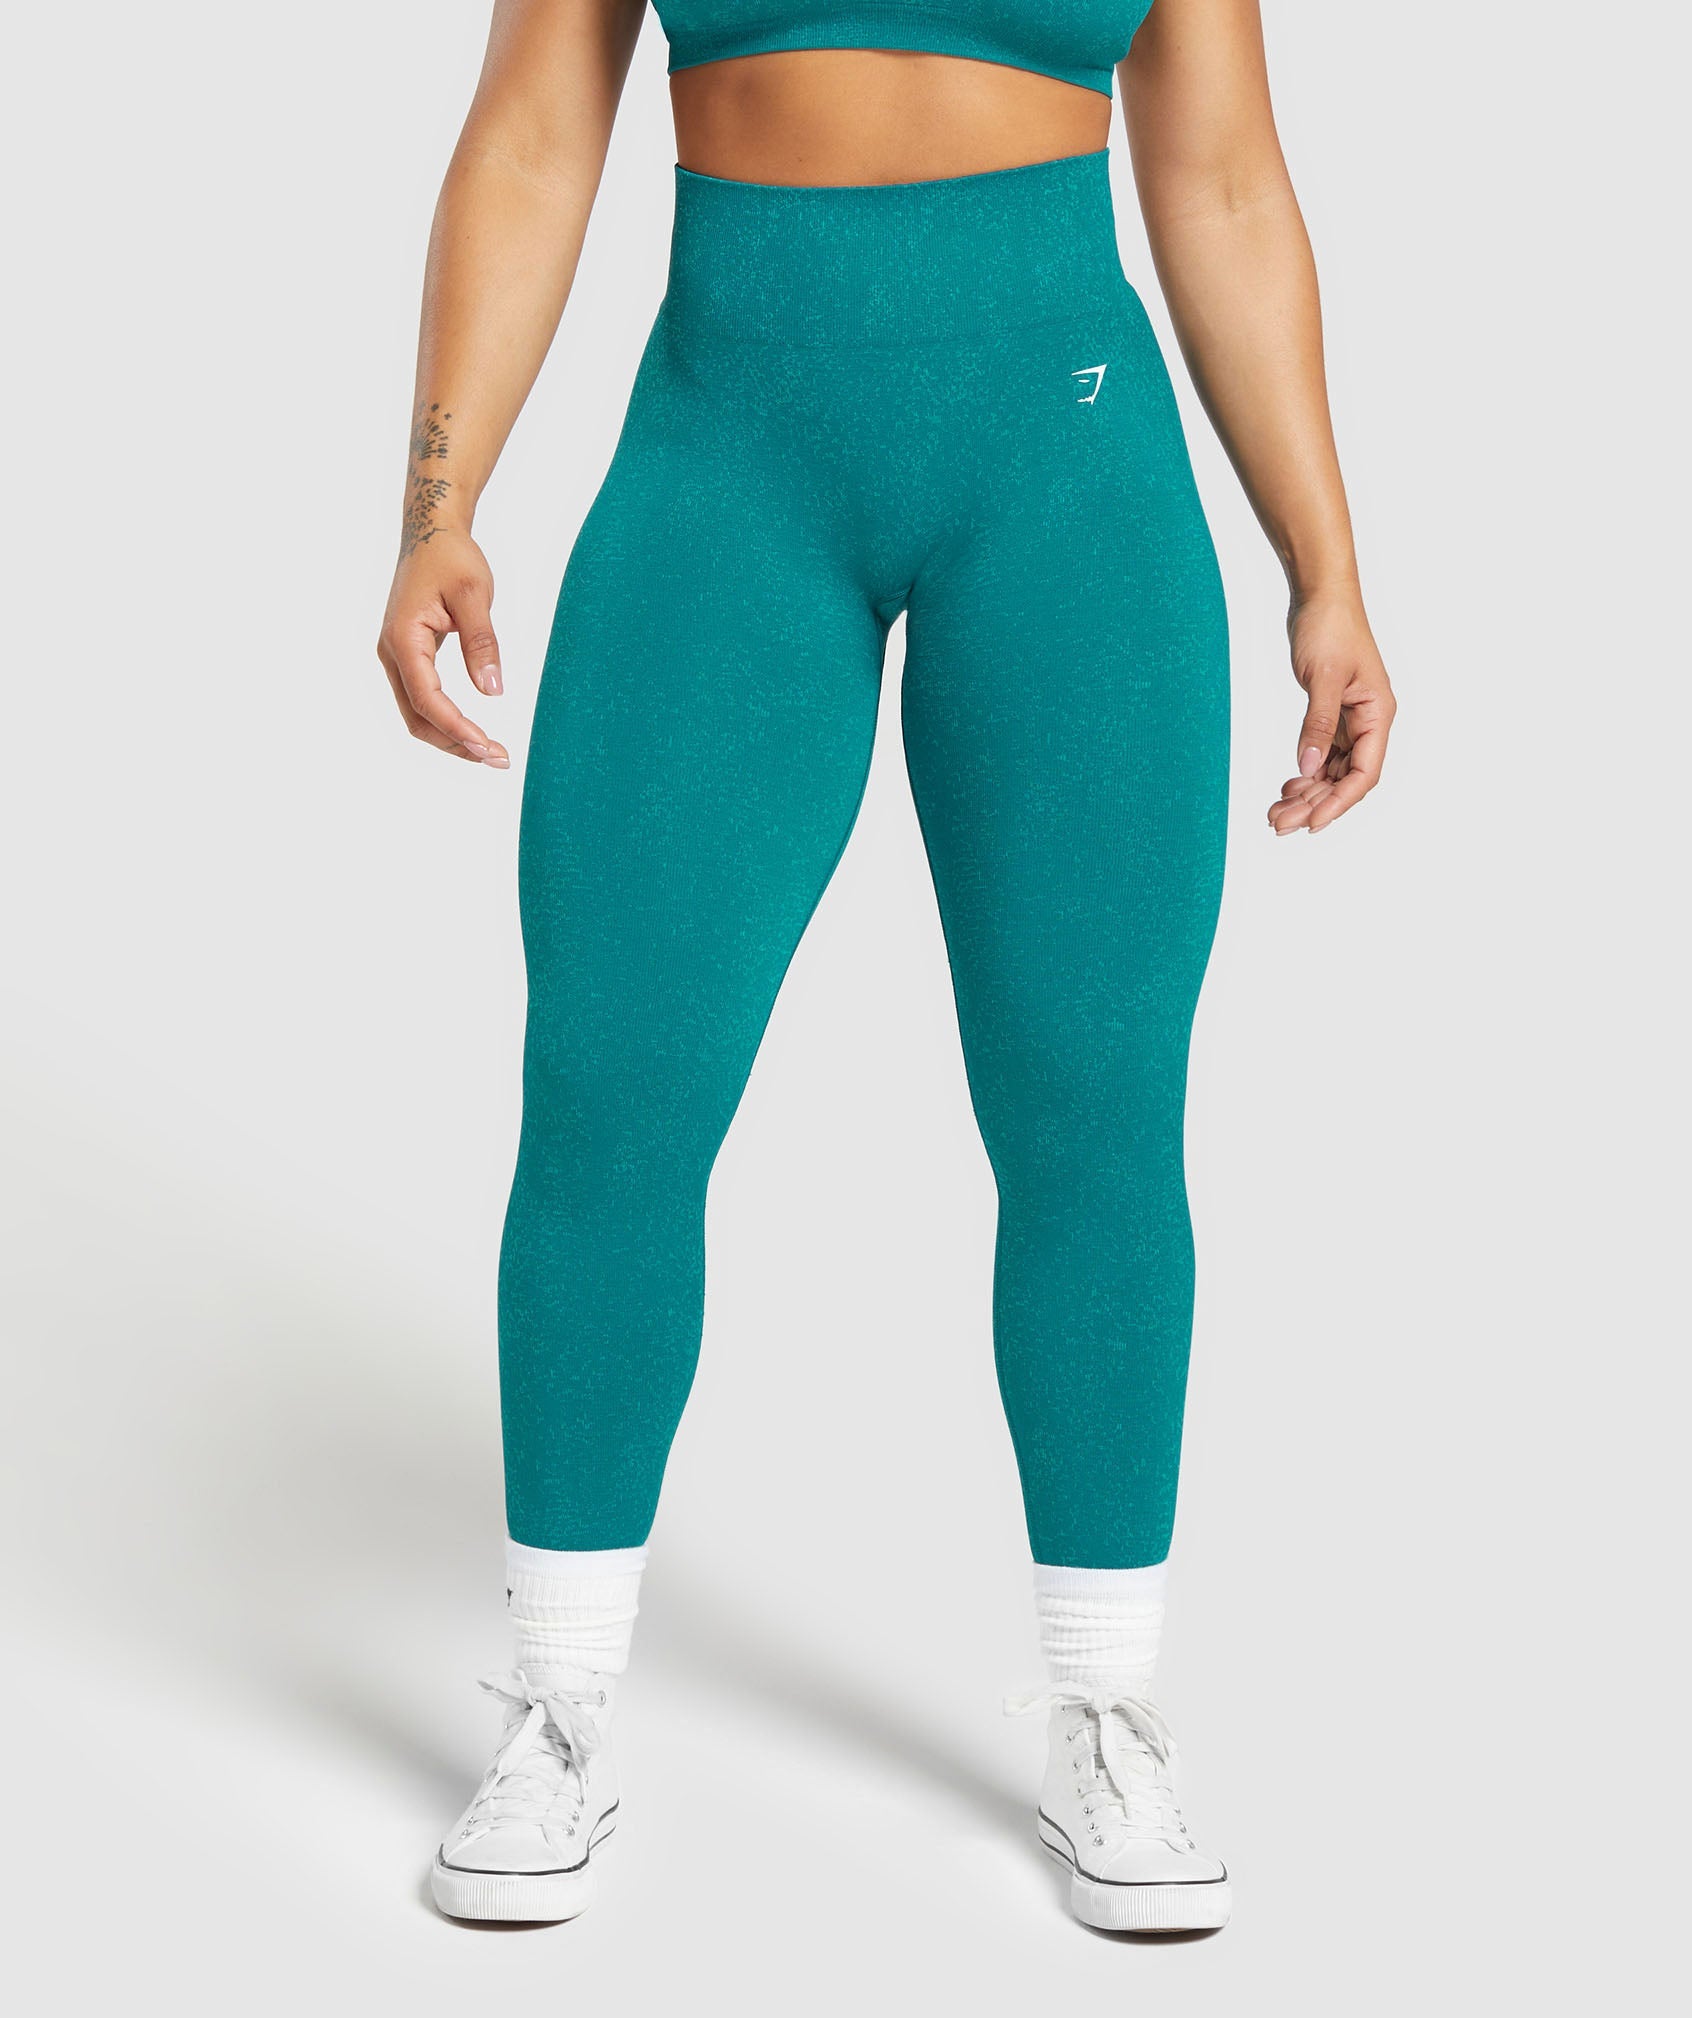 GYMSHARK Gymshark FIT MID RISE - Leggings - Women's - charged emerald/aqua  green - Private Sport Shop